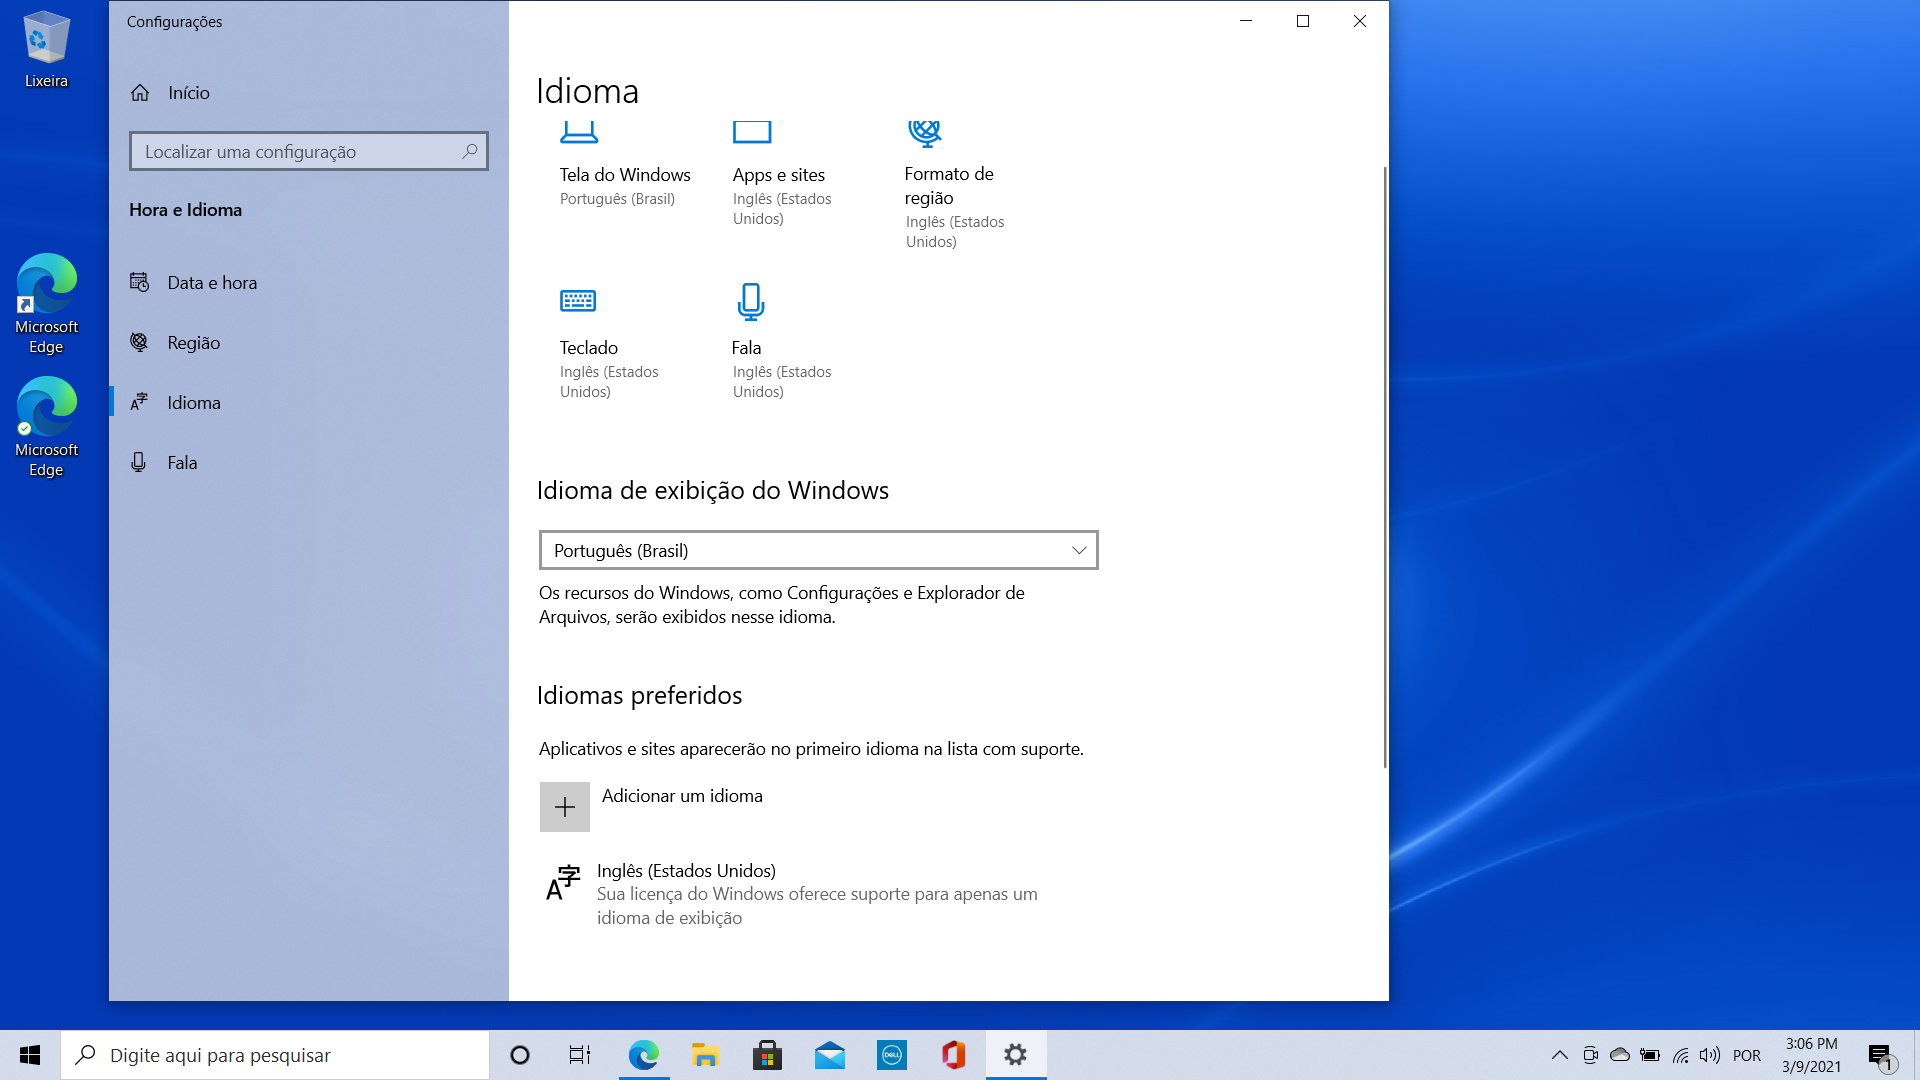 Change Windows 10 Display Language 73fb659e-9543-47bc-8205-8c4dcc608912?upload=true.png